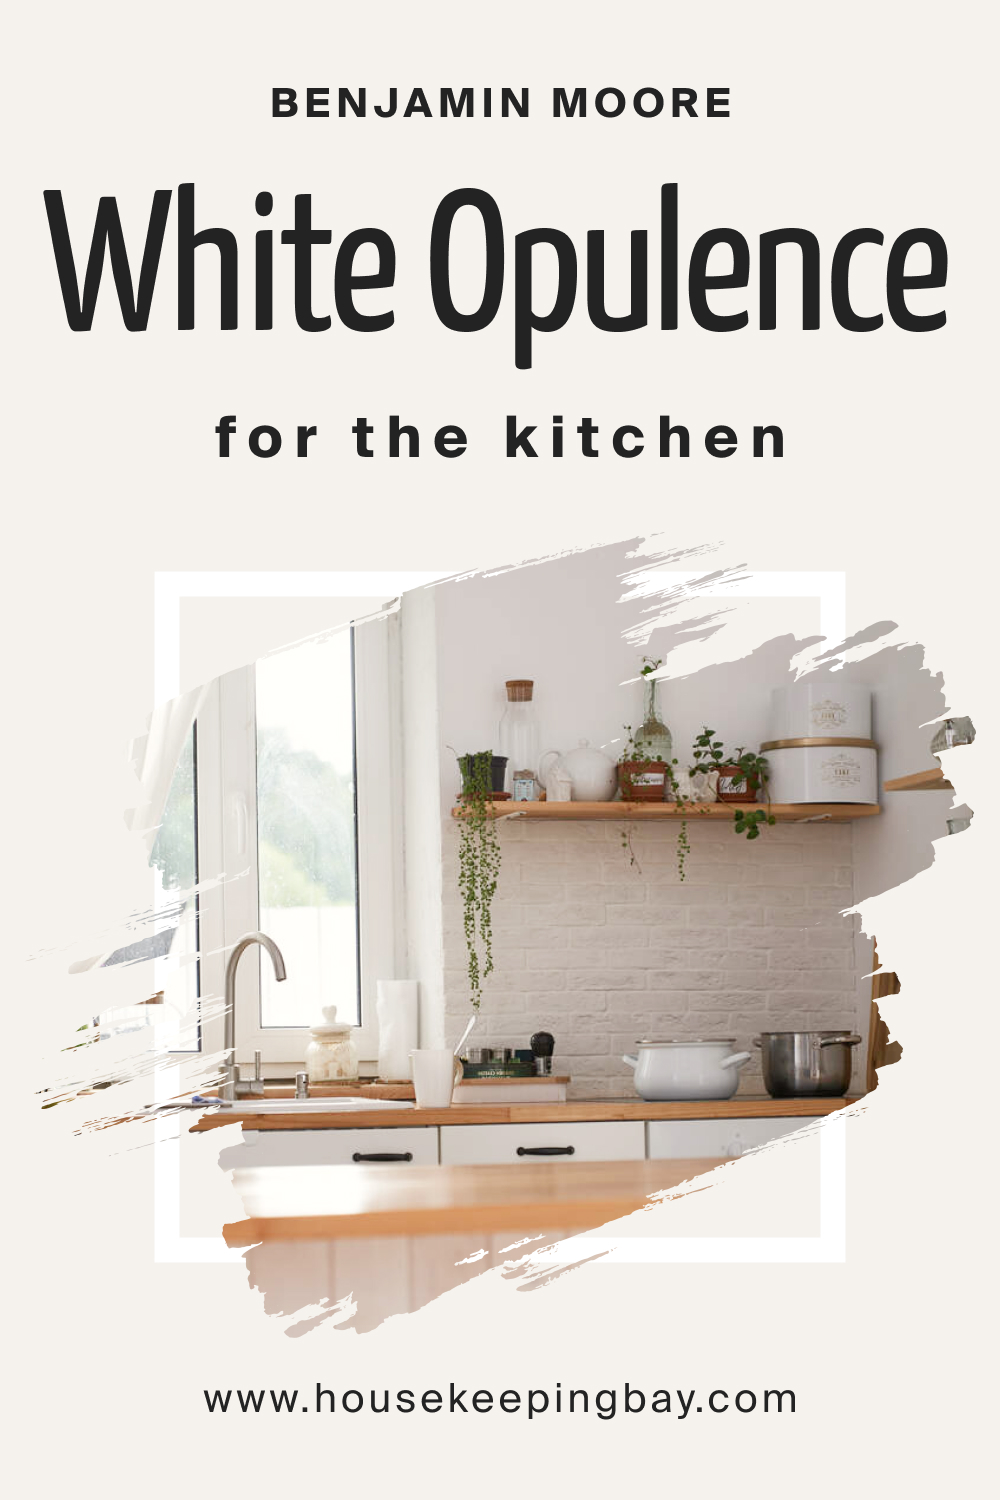 Benjamin Moore. White Opulence OC 69 for the Kitchen